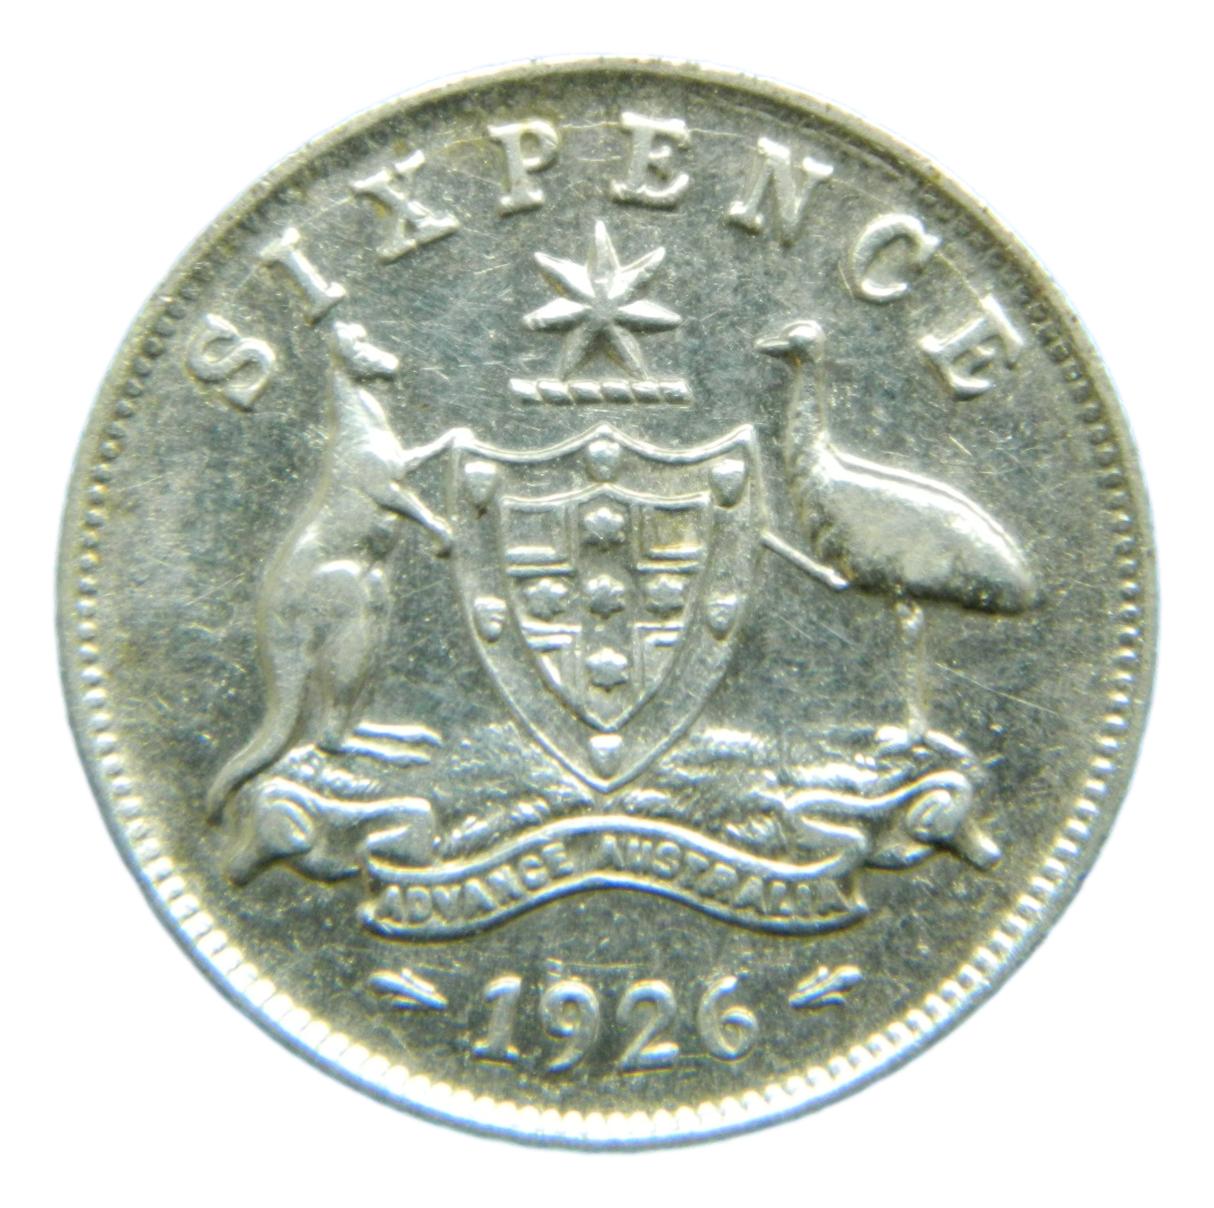 1926 - AUSTRALIA - 6 PENCE - GEORGE V - EBC - S9/541